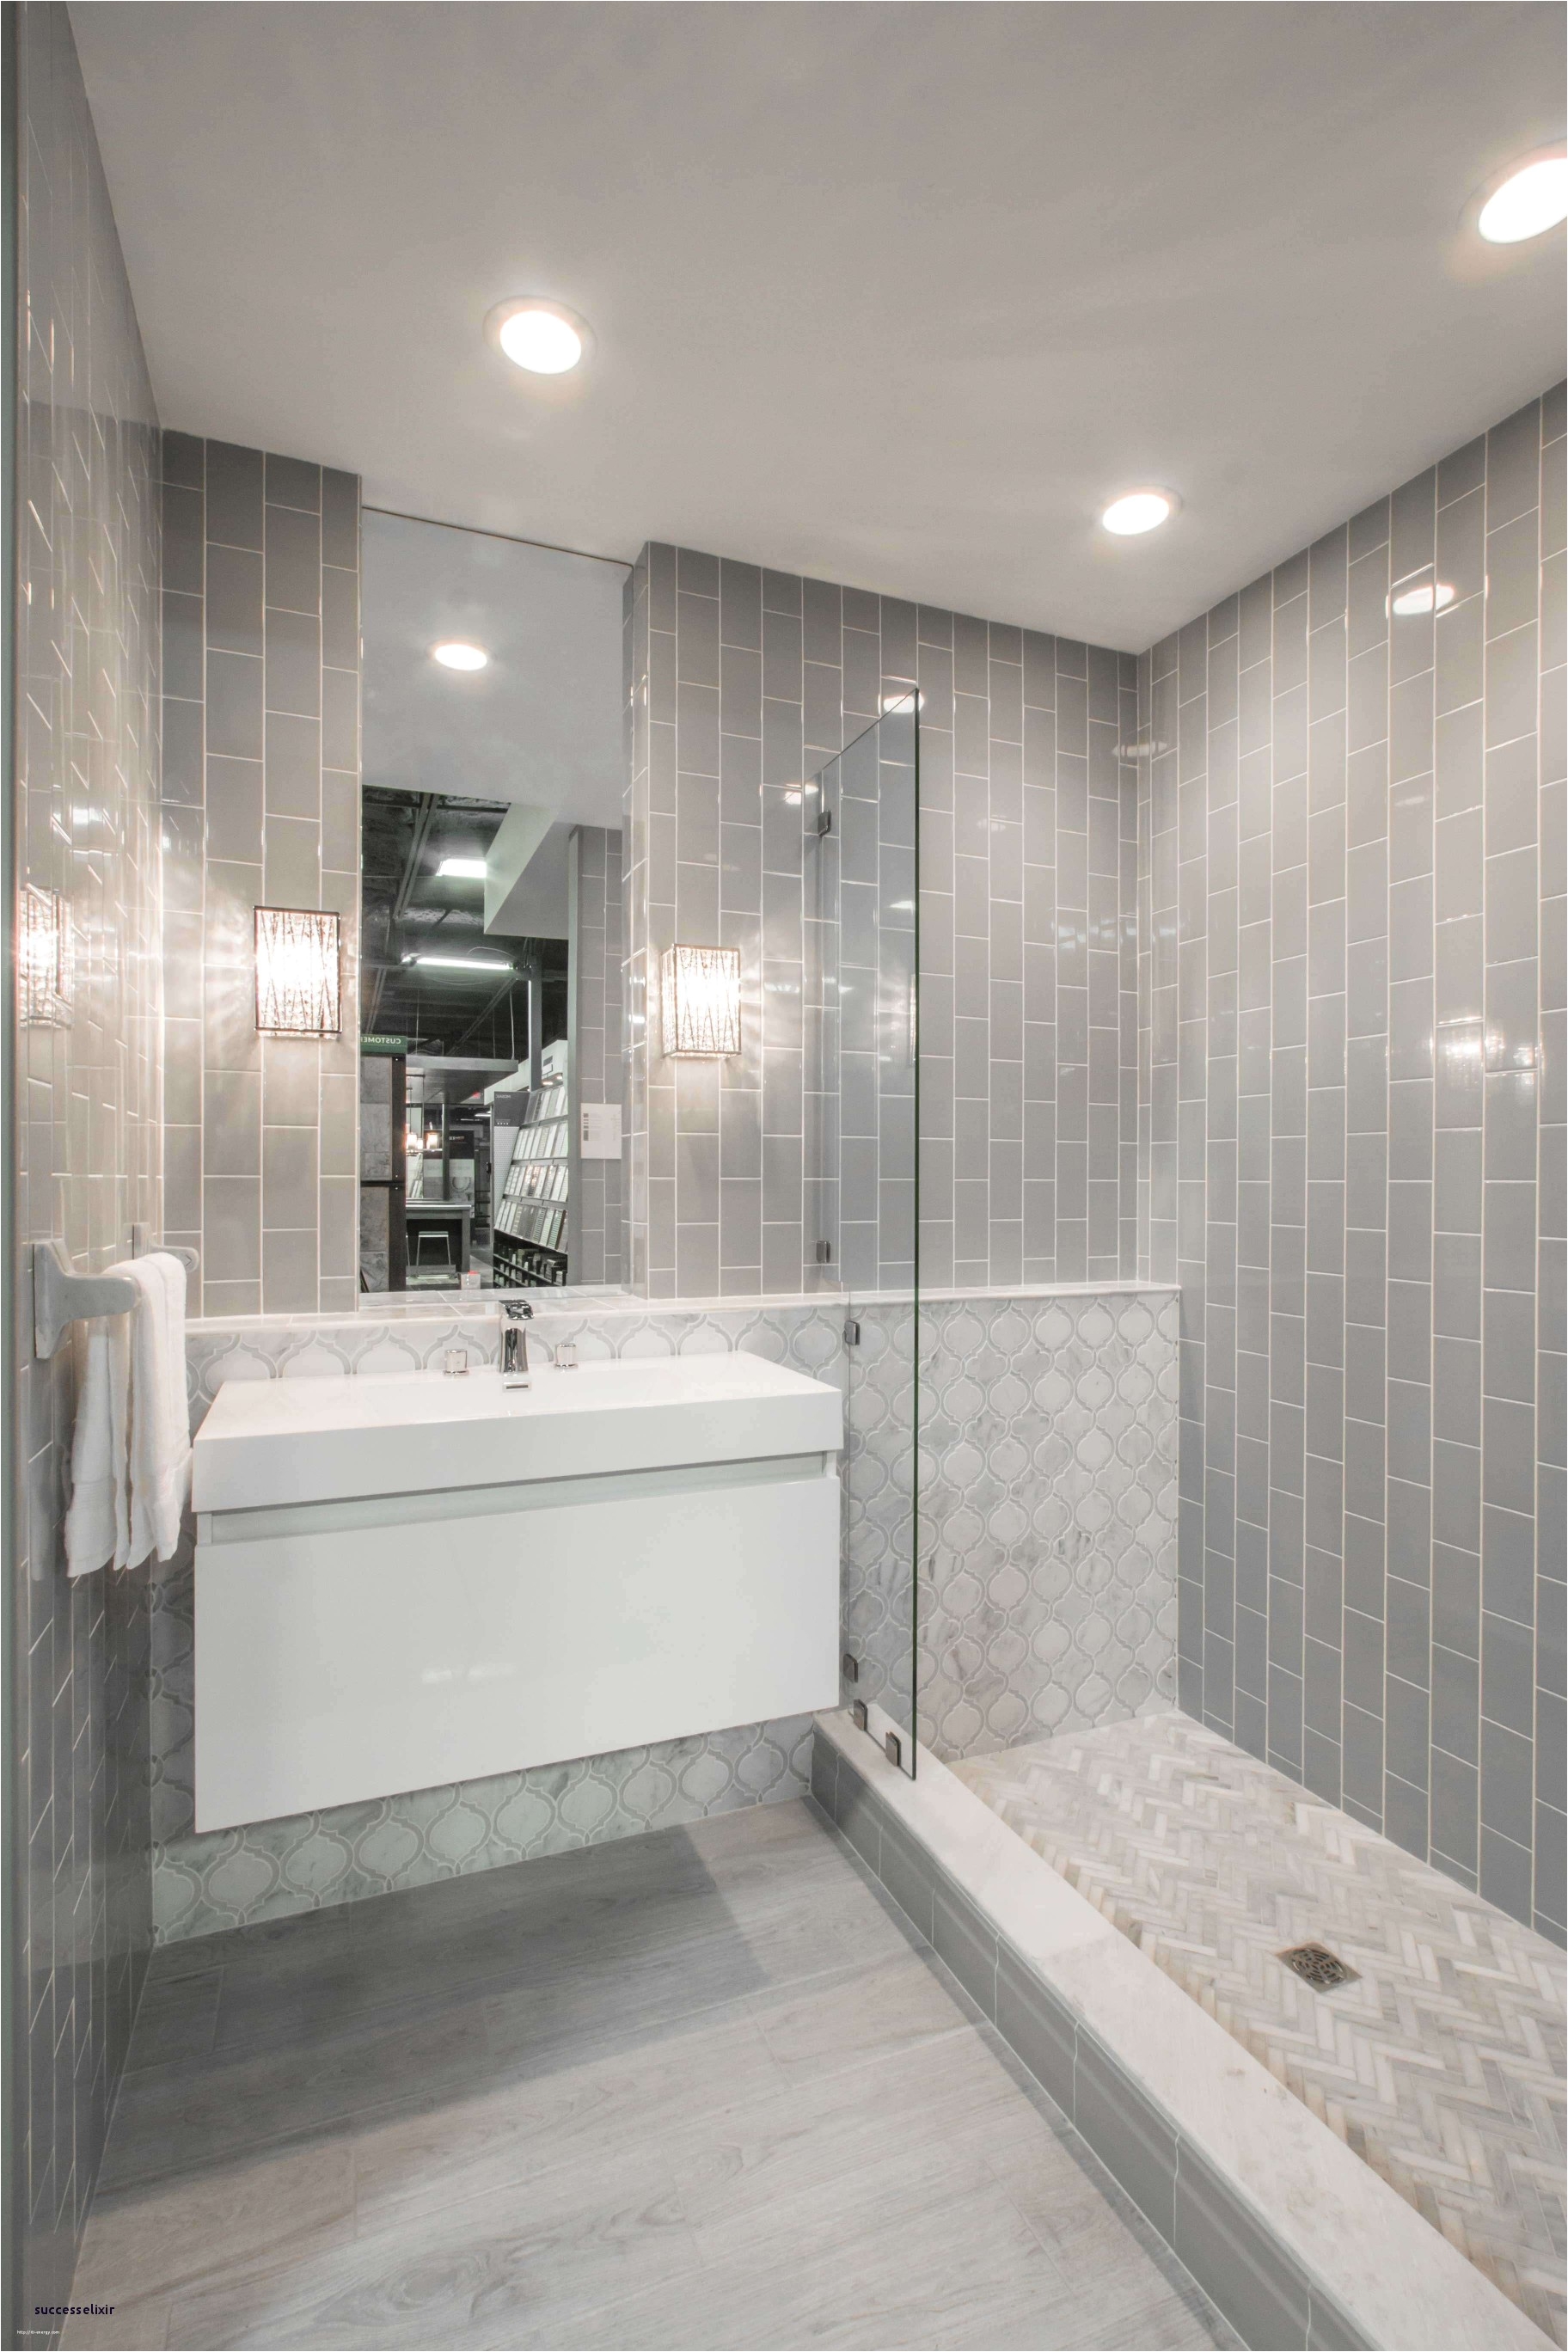 Tile Design Ideas Bathroom Marvelous Small Bathroom Shower Tile Ideas